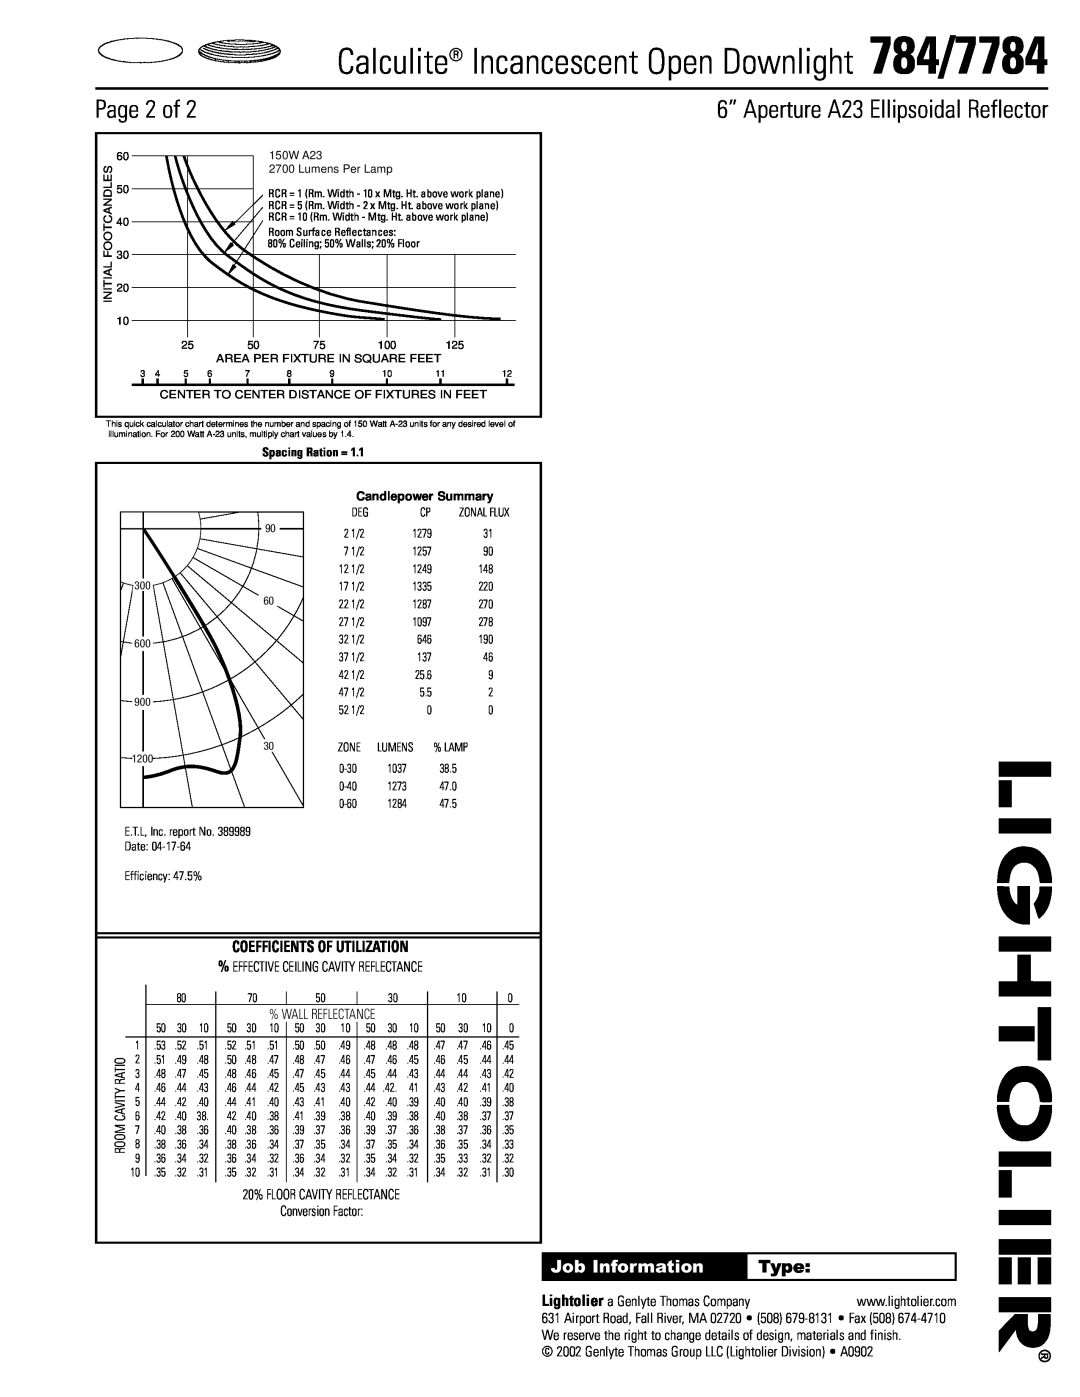 Lightolier Page 2 of, Calculite Incancescent Open Downlight 784/7784, 6” Aperture A23 Ellipsoidal Reflector, Type 